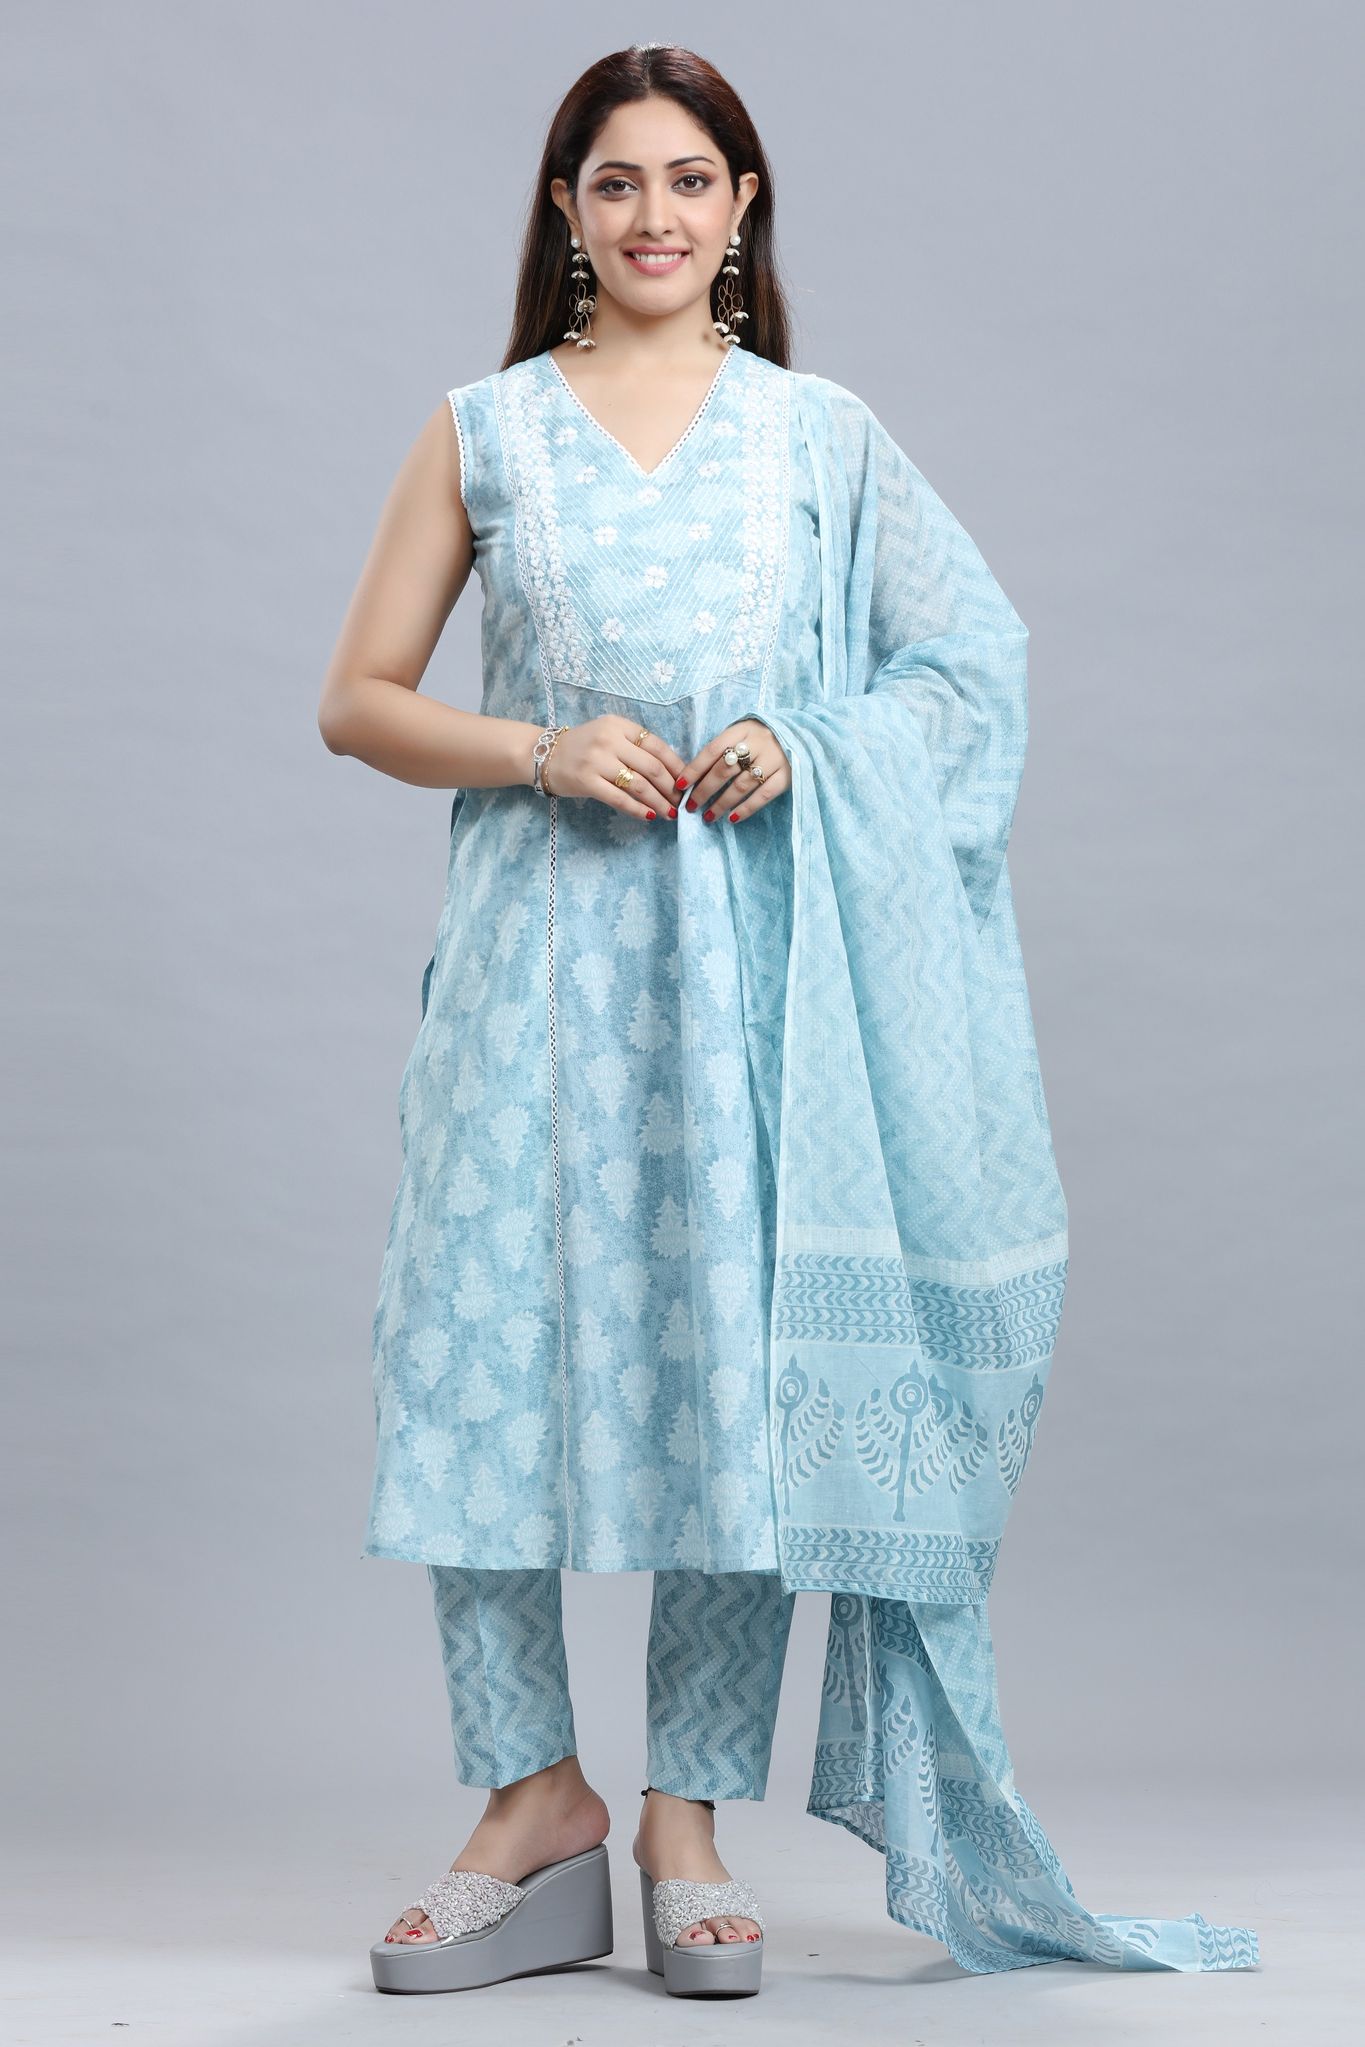 Triveni Sky Blue Jaipuri Cotton Suit Set